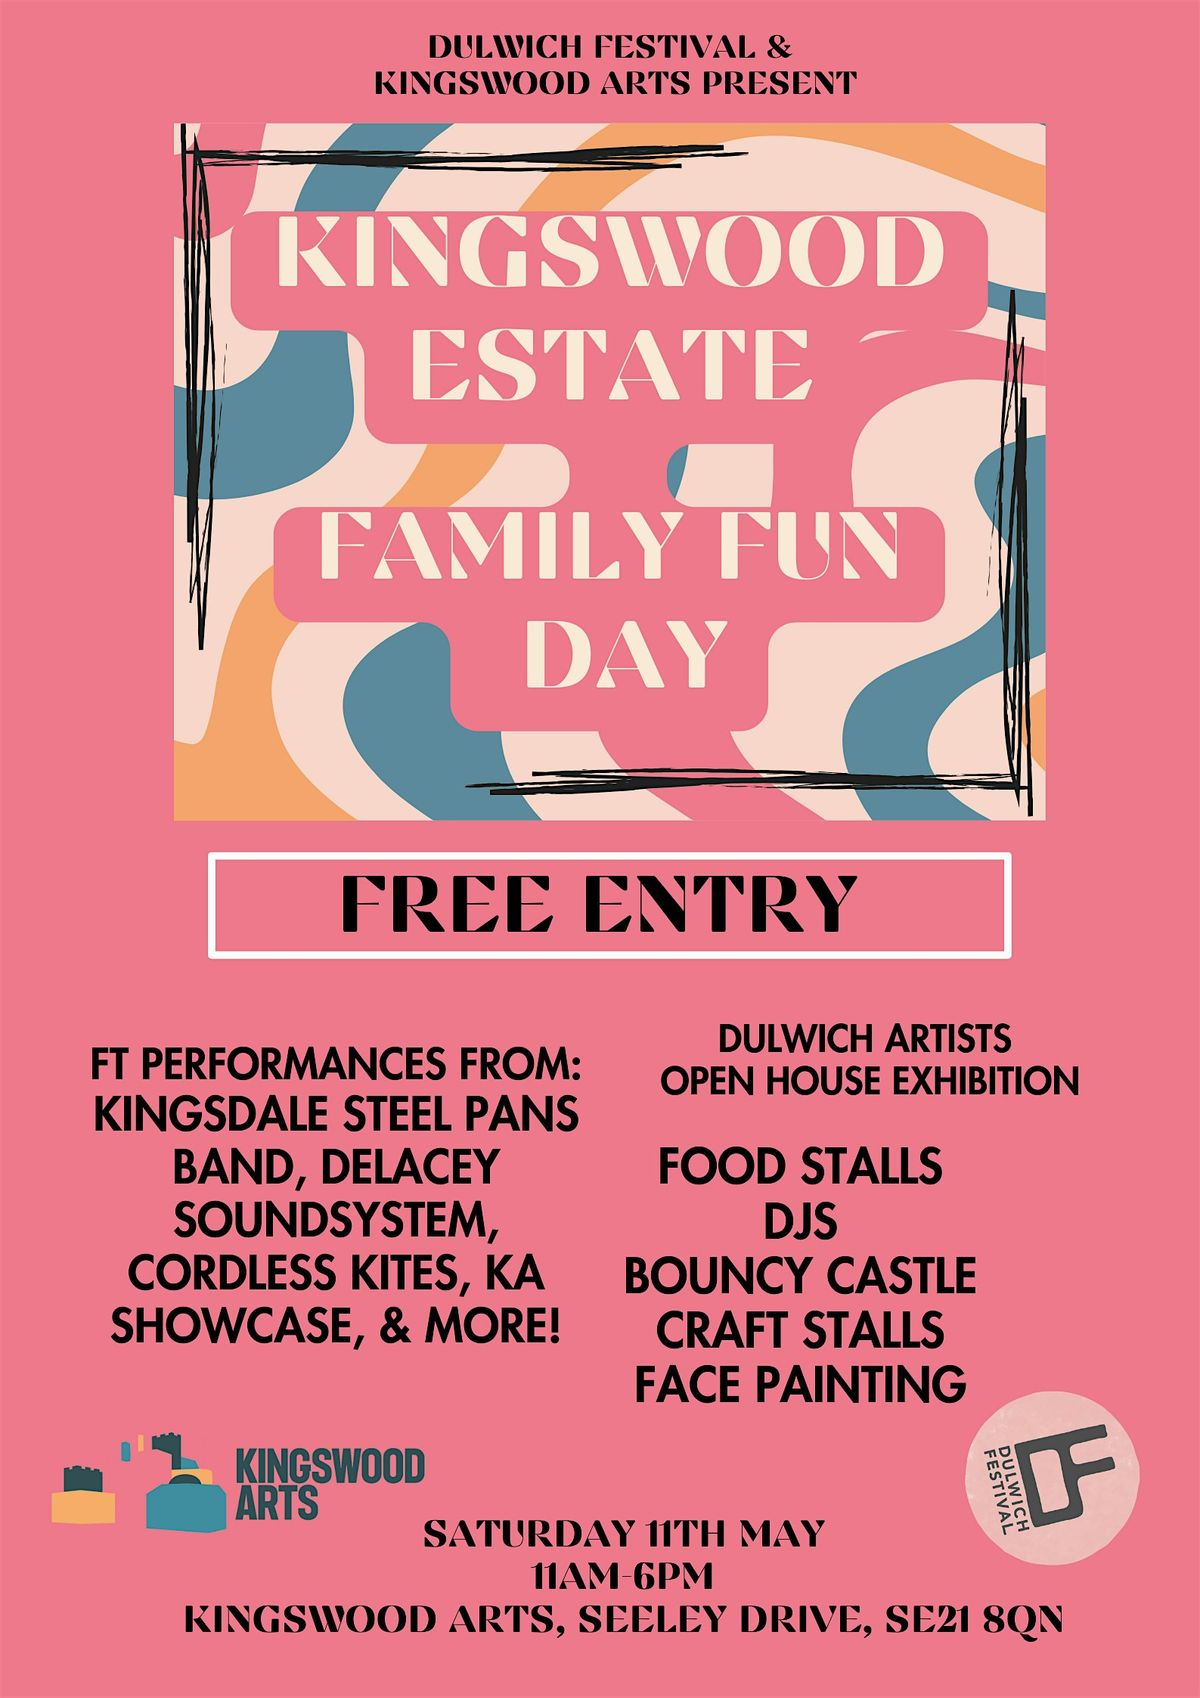 Kingswood Estate Family Fun Day!